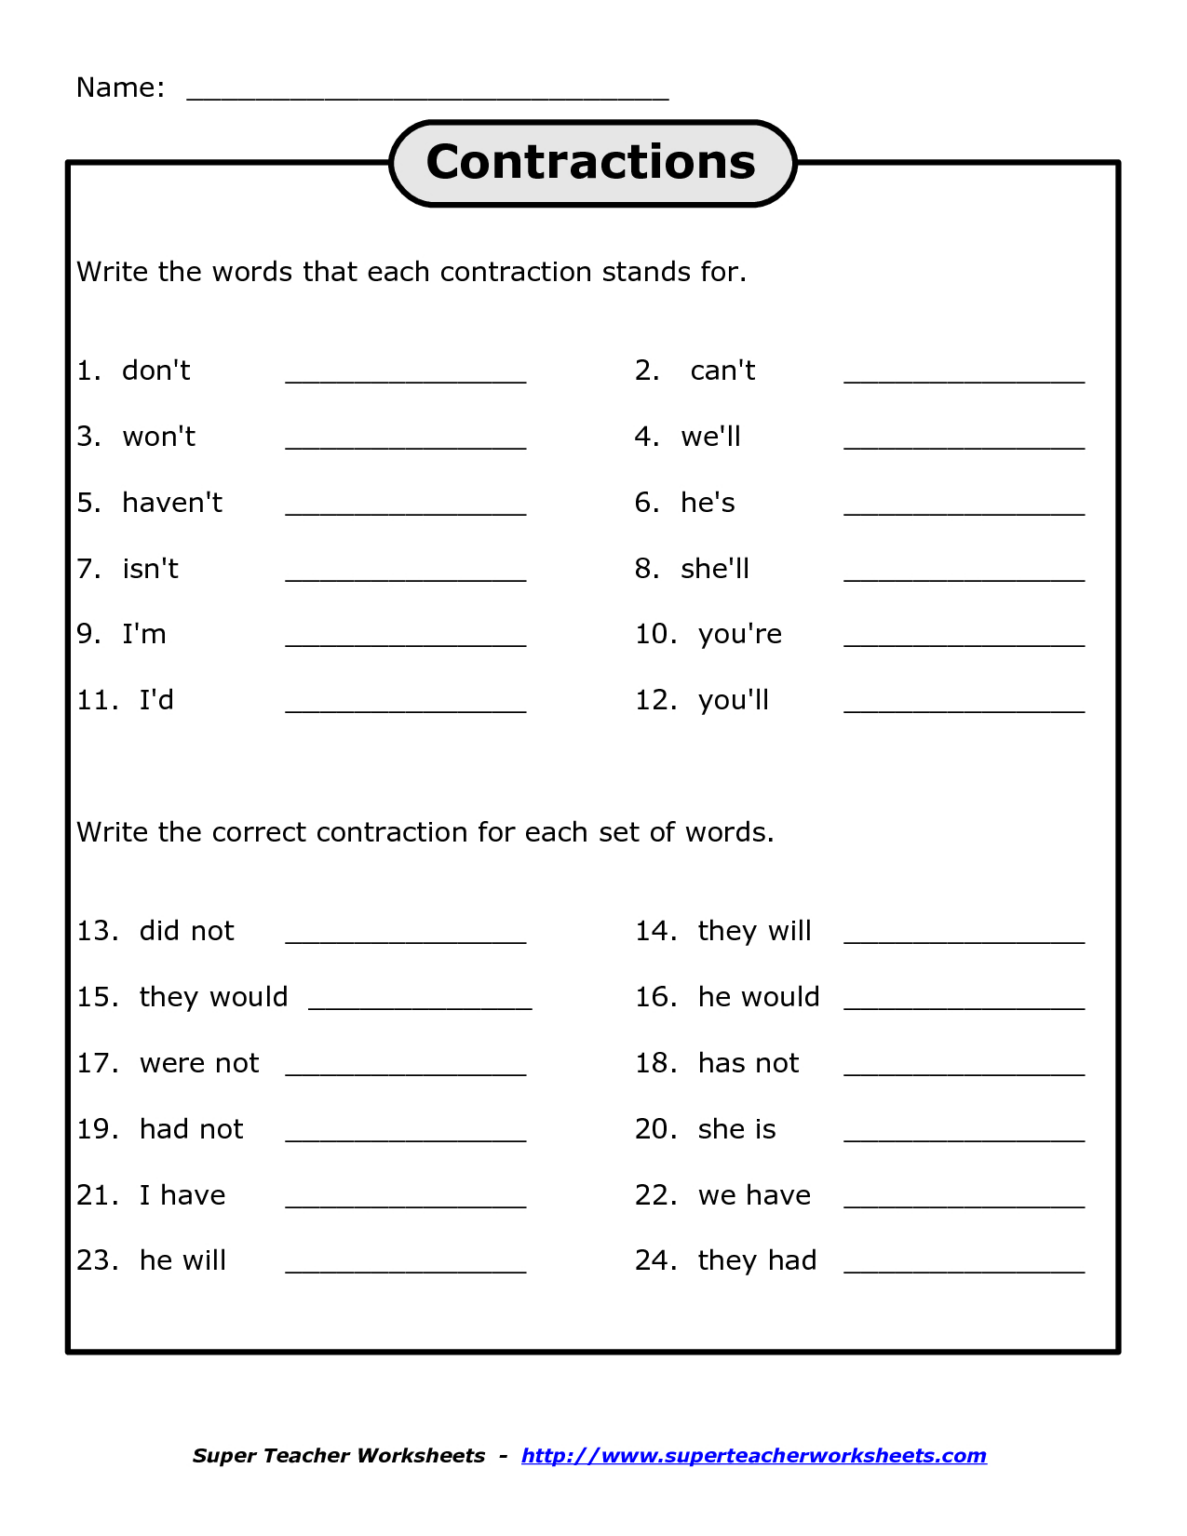 free-printable-worksheets-for-4th-grade-language-arts-printable